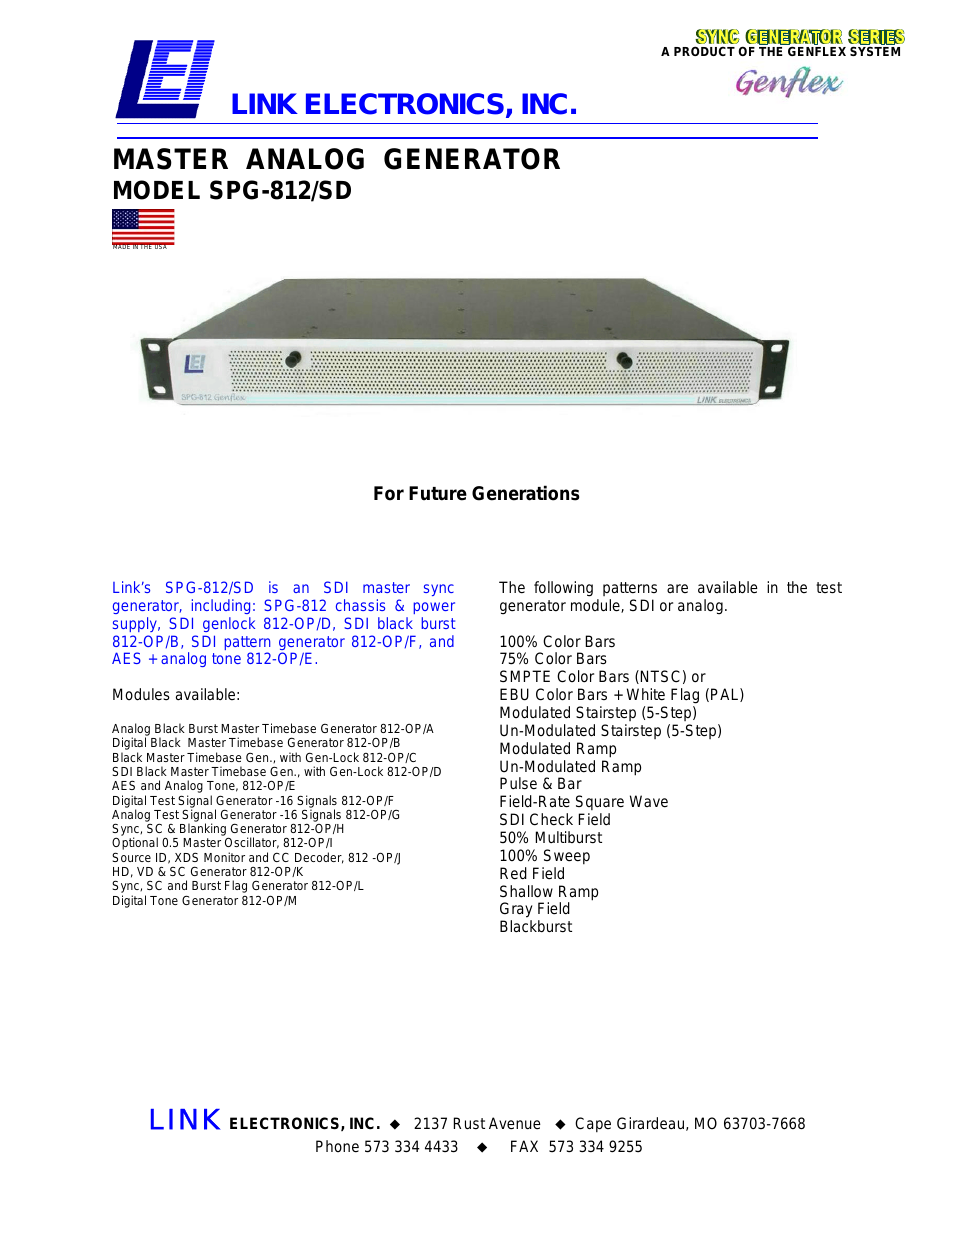 Master Analog Generator SPG-812/SD